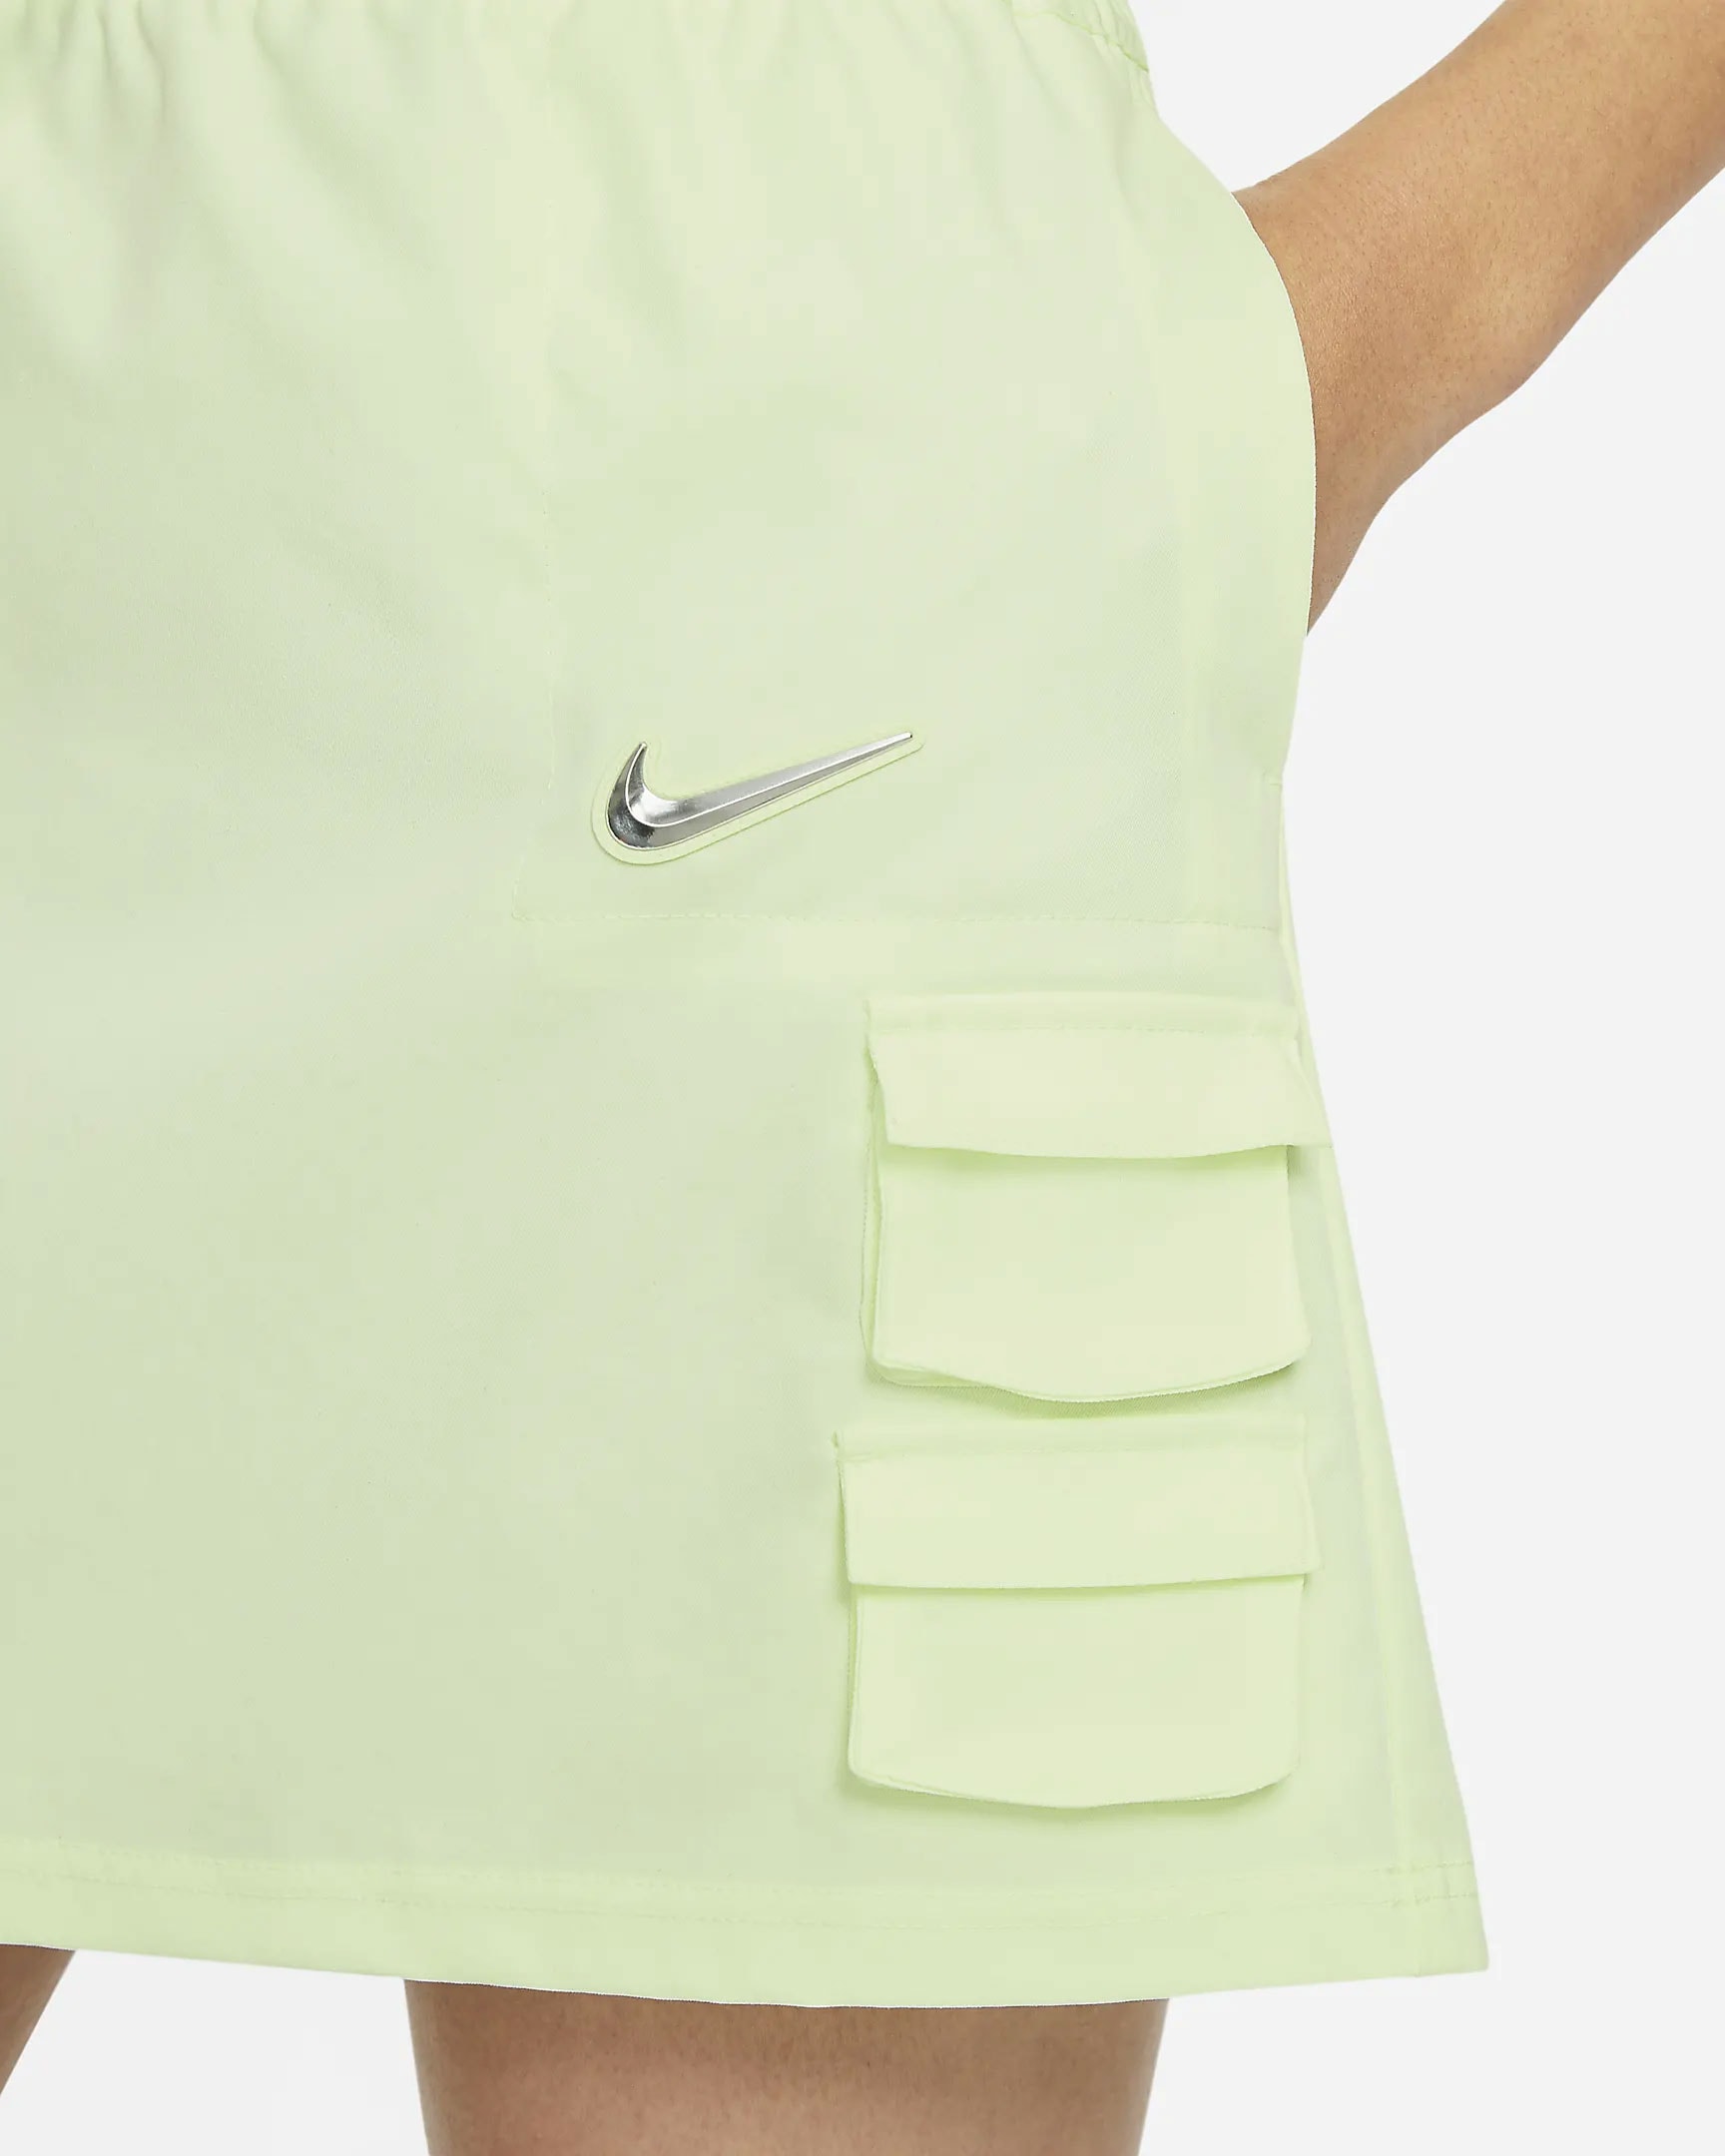 nike sportswear swoosh logo skirt barely volt spring summer outfit details closeup mini pockets